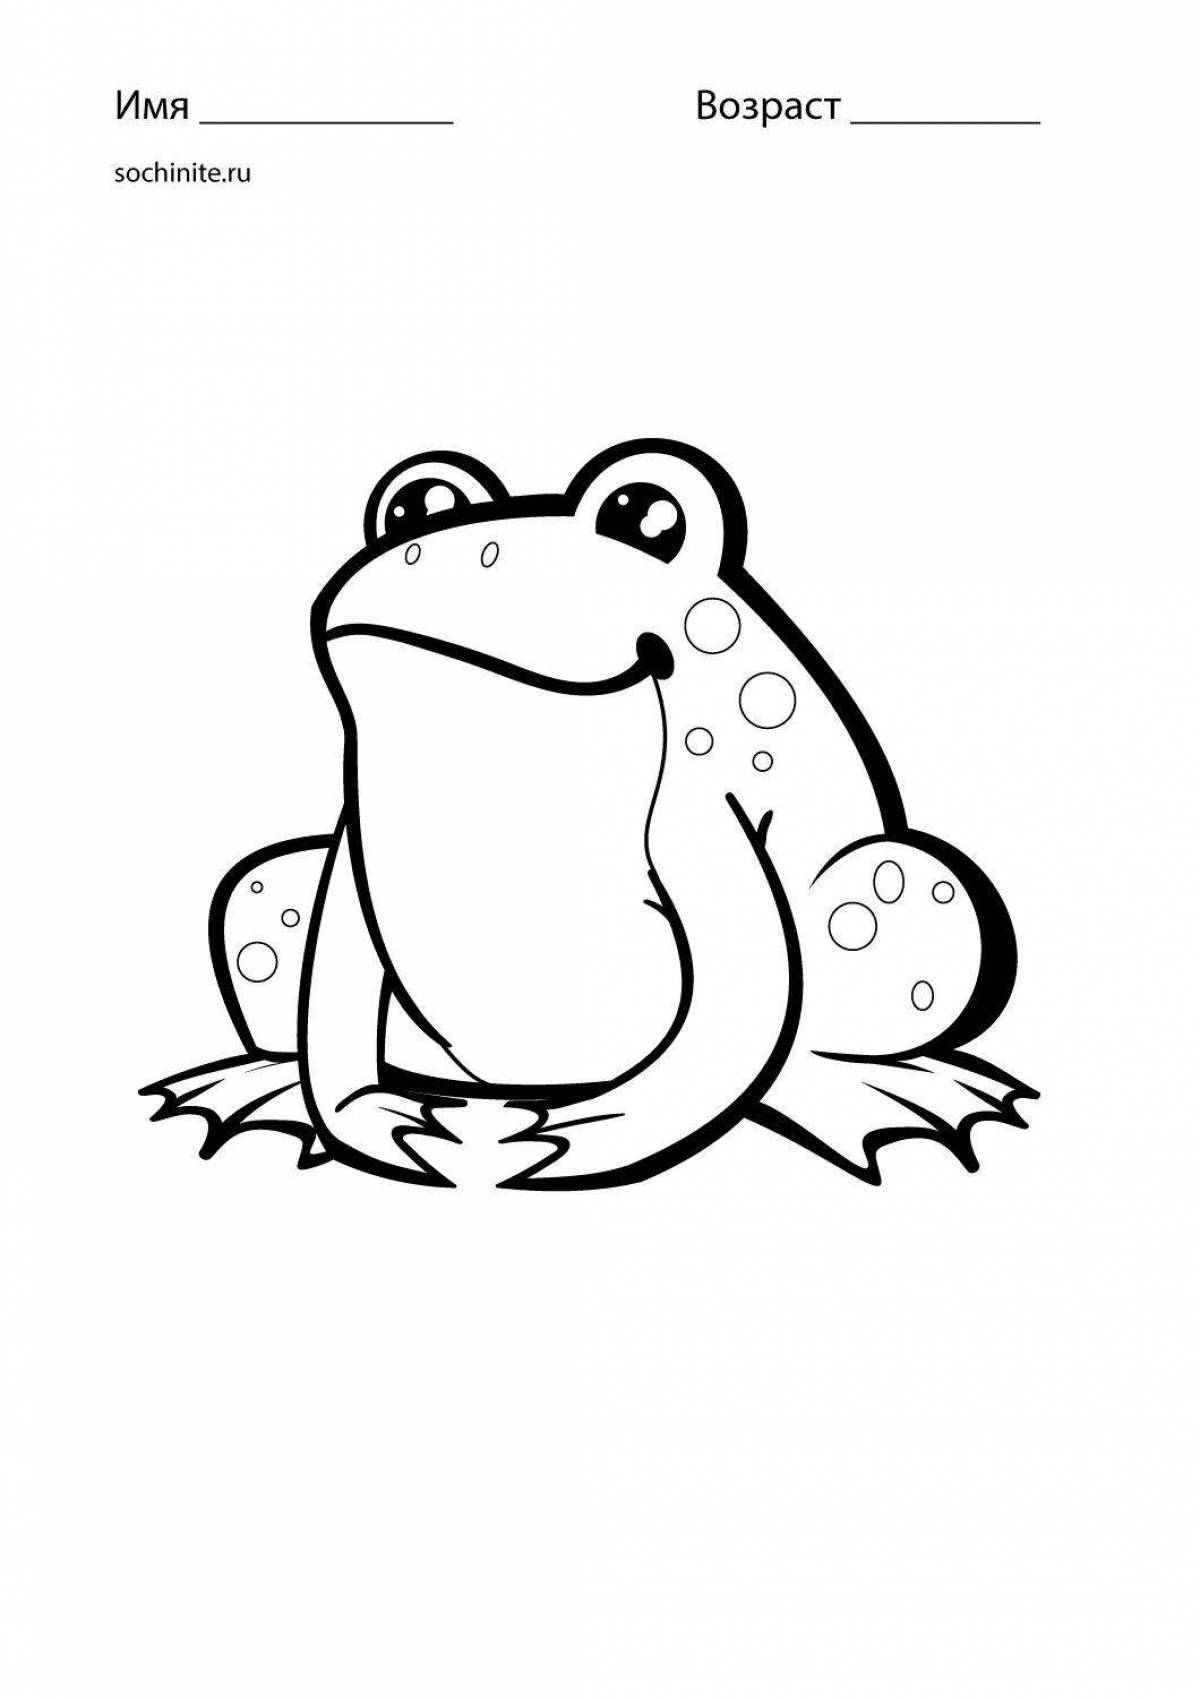 Coloring cute frog